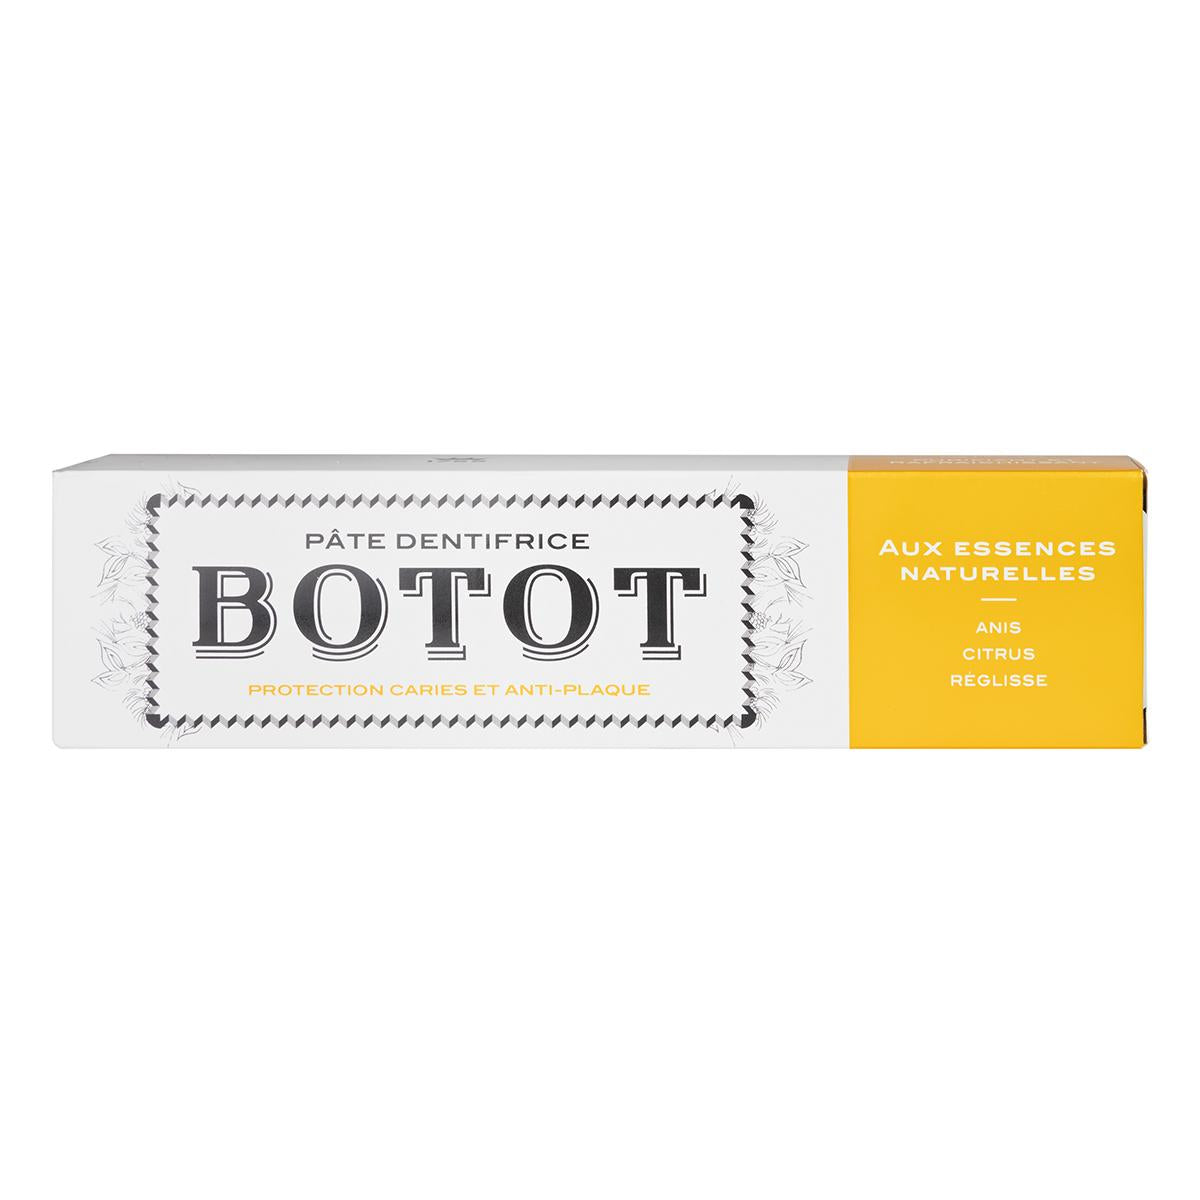 Primary image of Botot Yellow Toothpaste